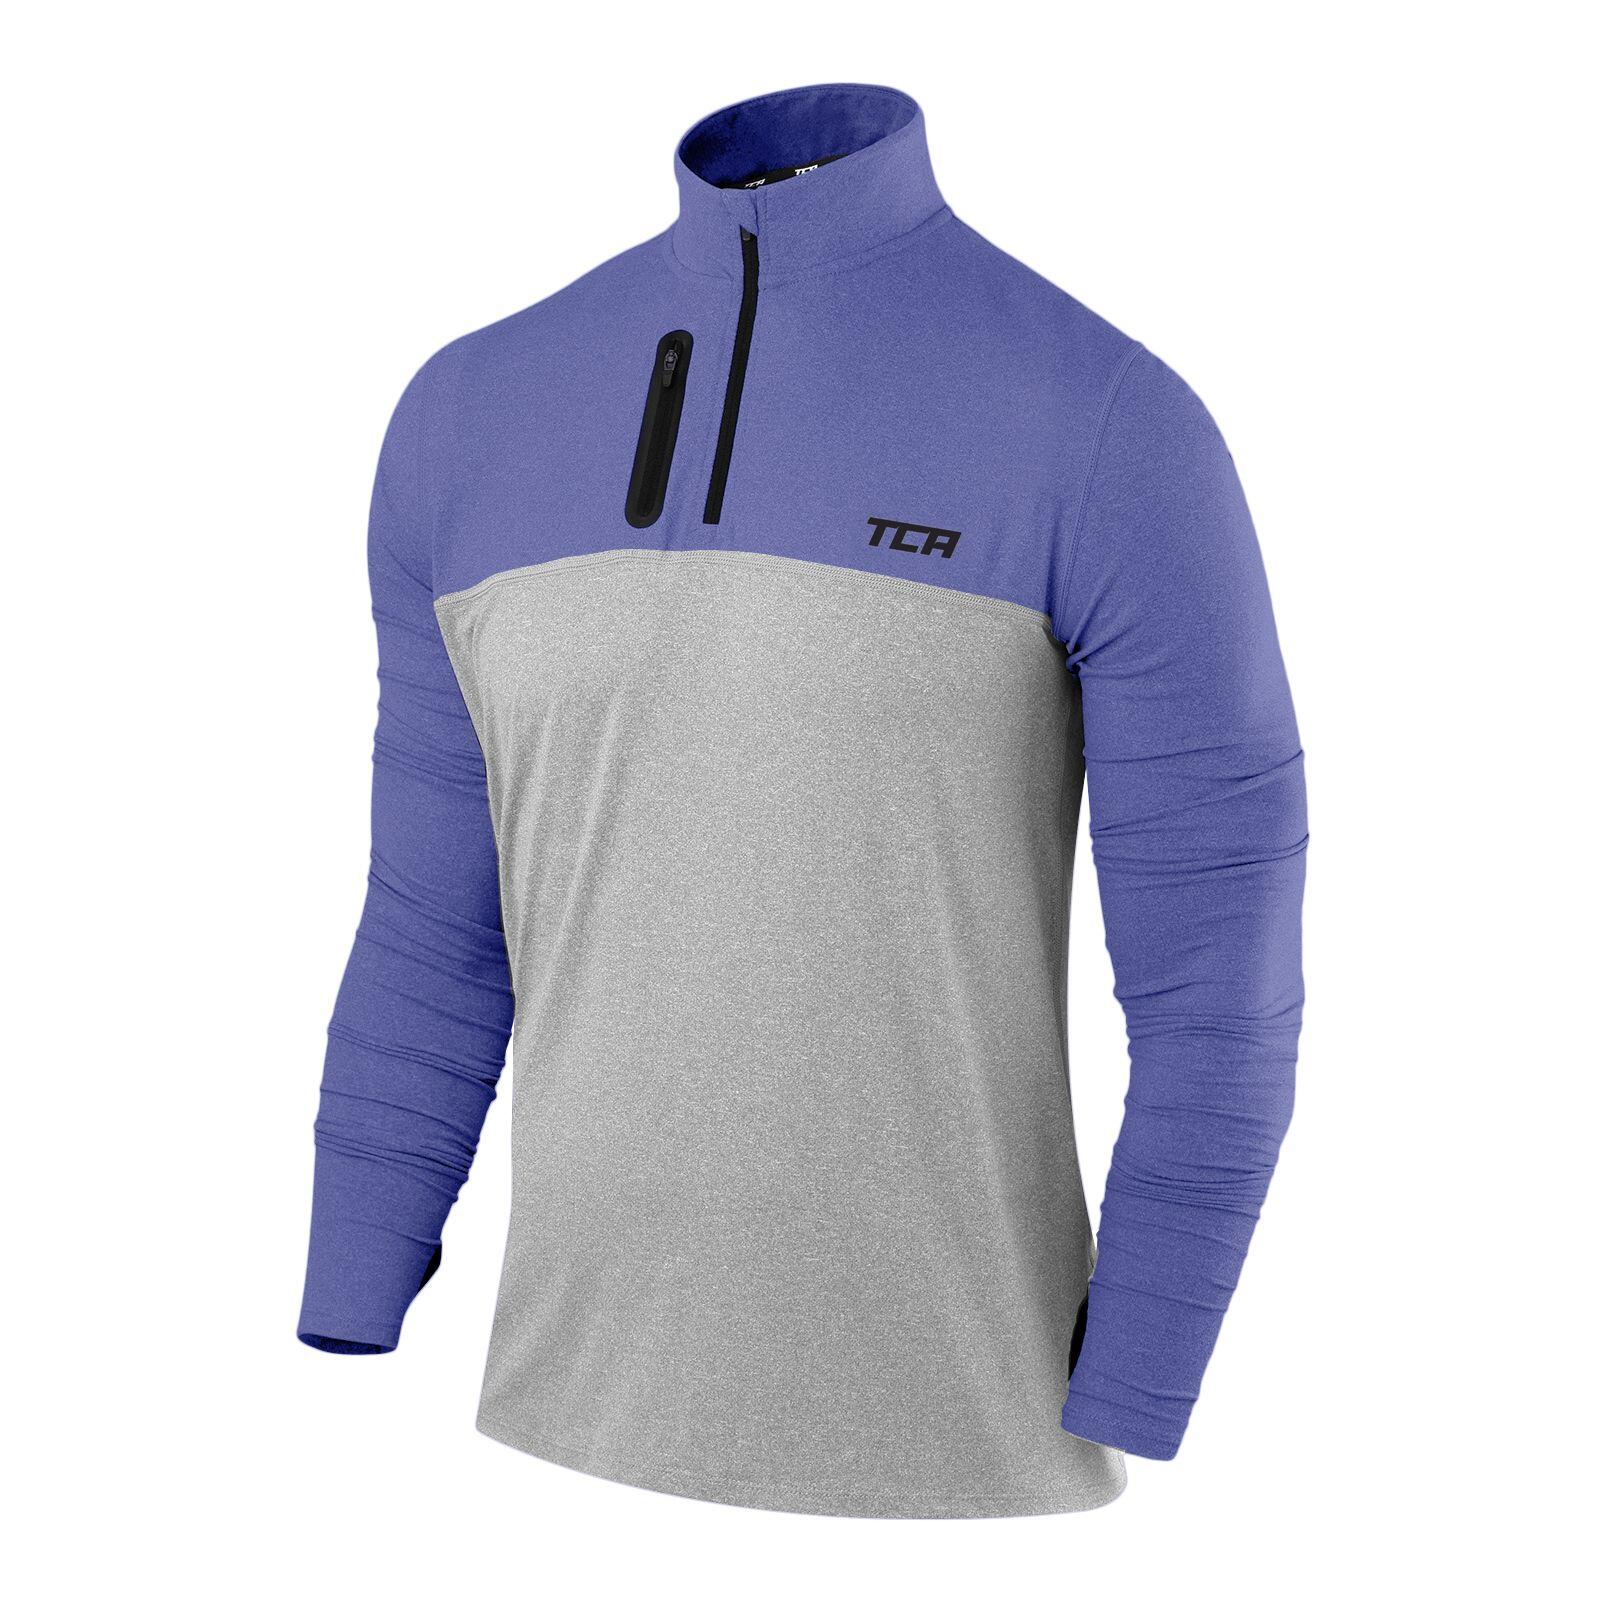 Men's Fusion Long Sleeve Half Zip Running Gym Top - Grey/Dazzling Blue 1/5